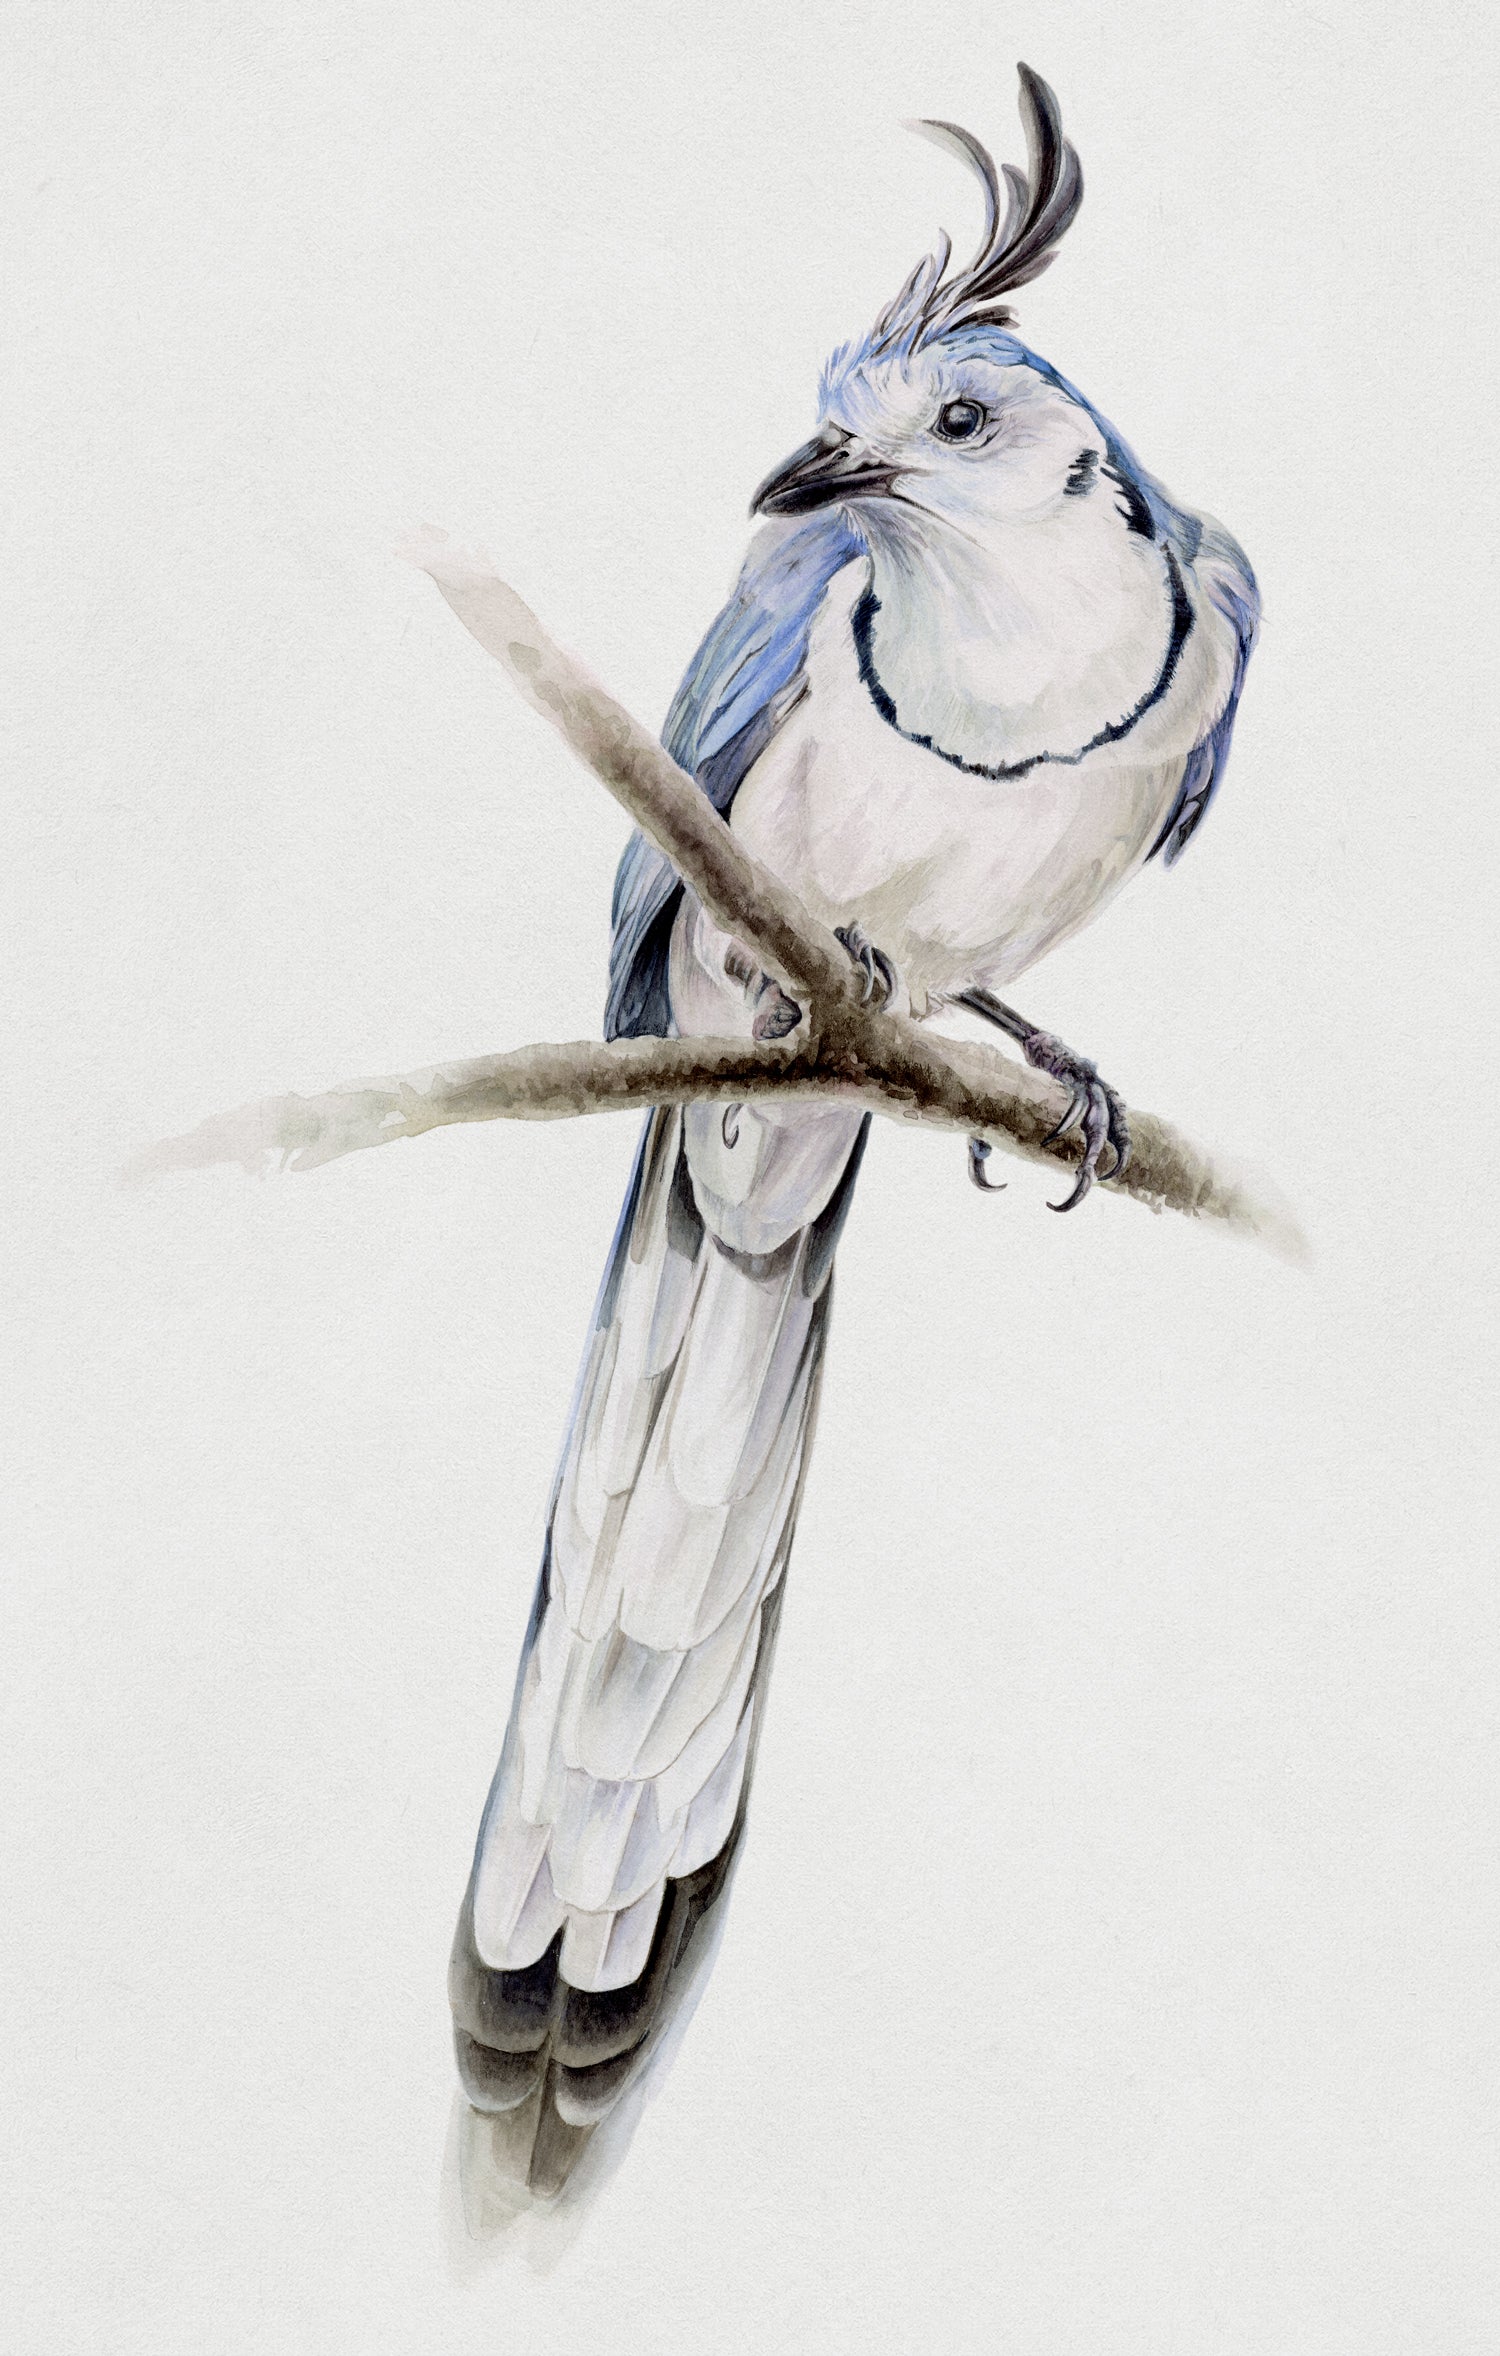 tropical bird illustrations in watercolor by wildlife artist antonia reyes montealegre, Calocitta formosa